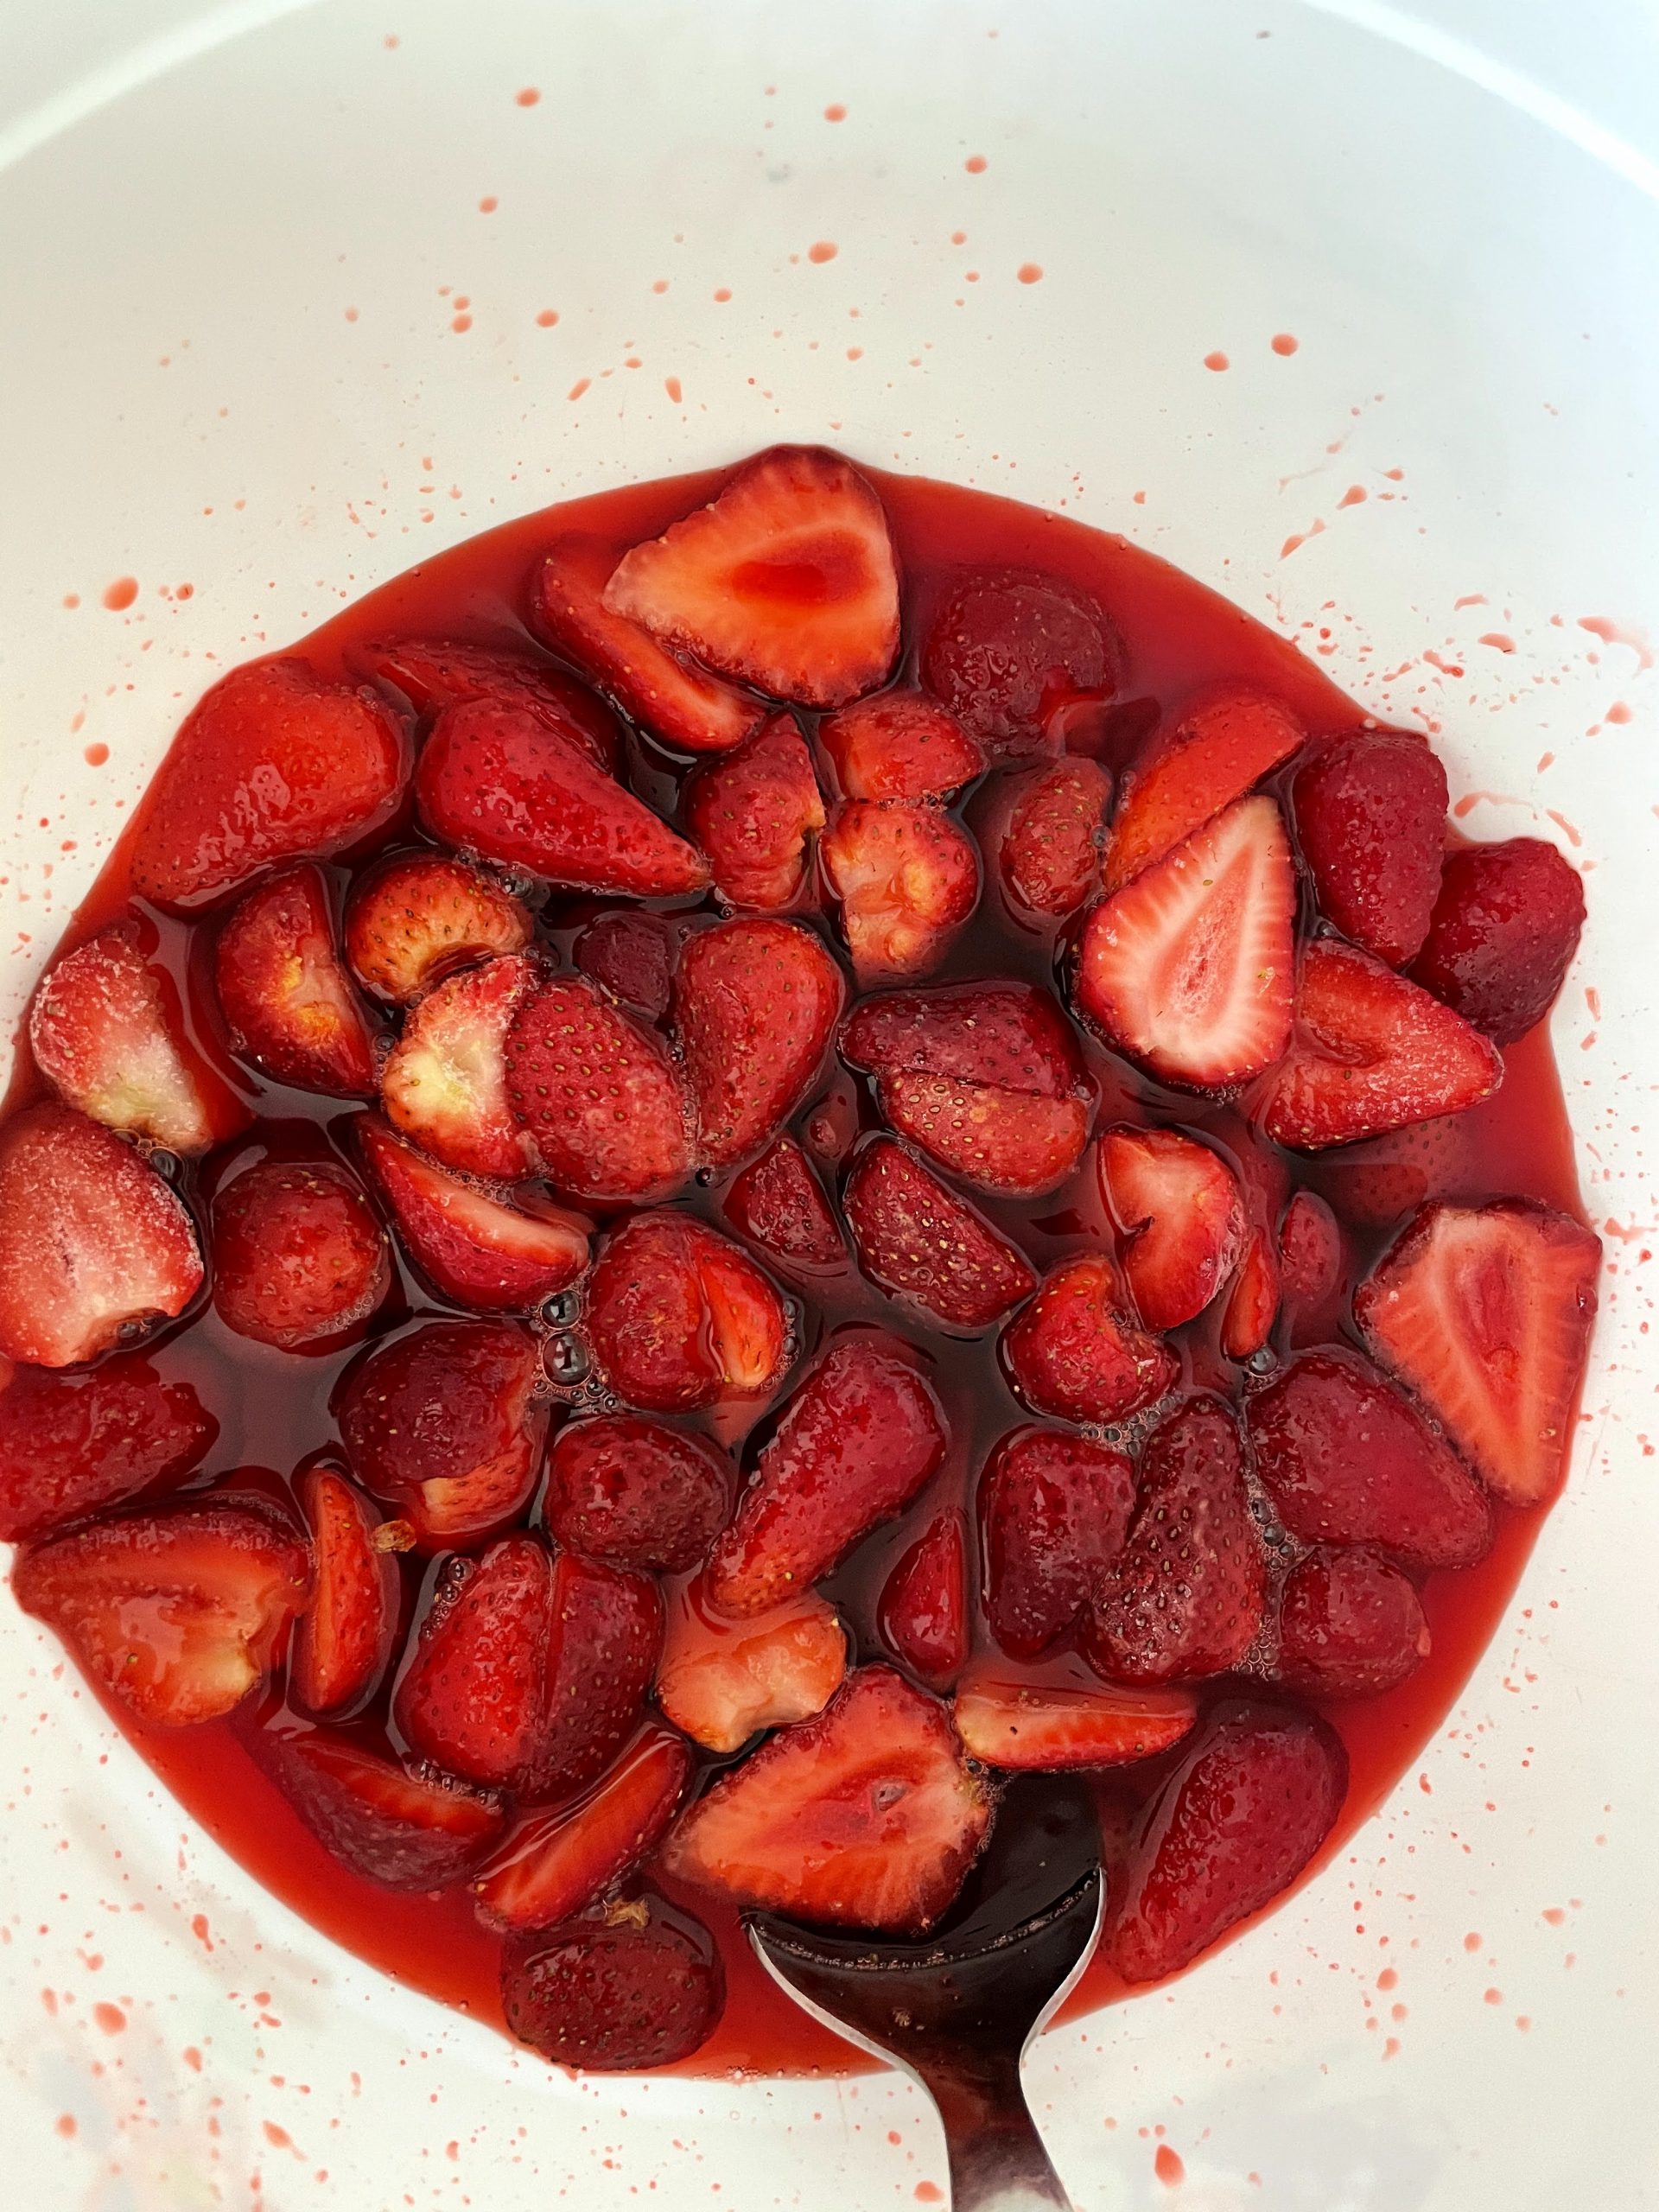 Jello sets when frozen strawberries are added.